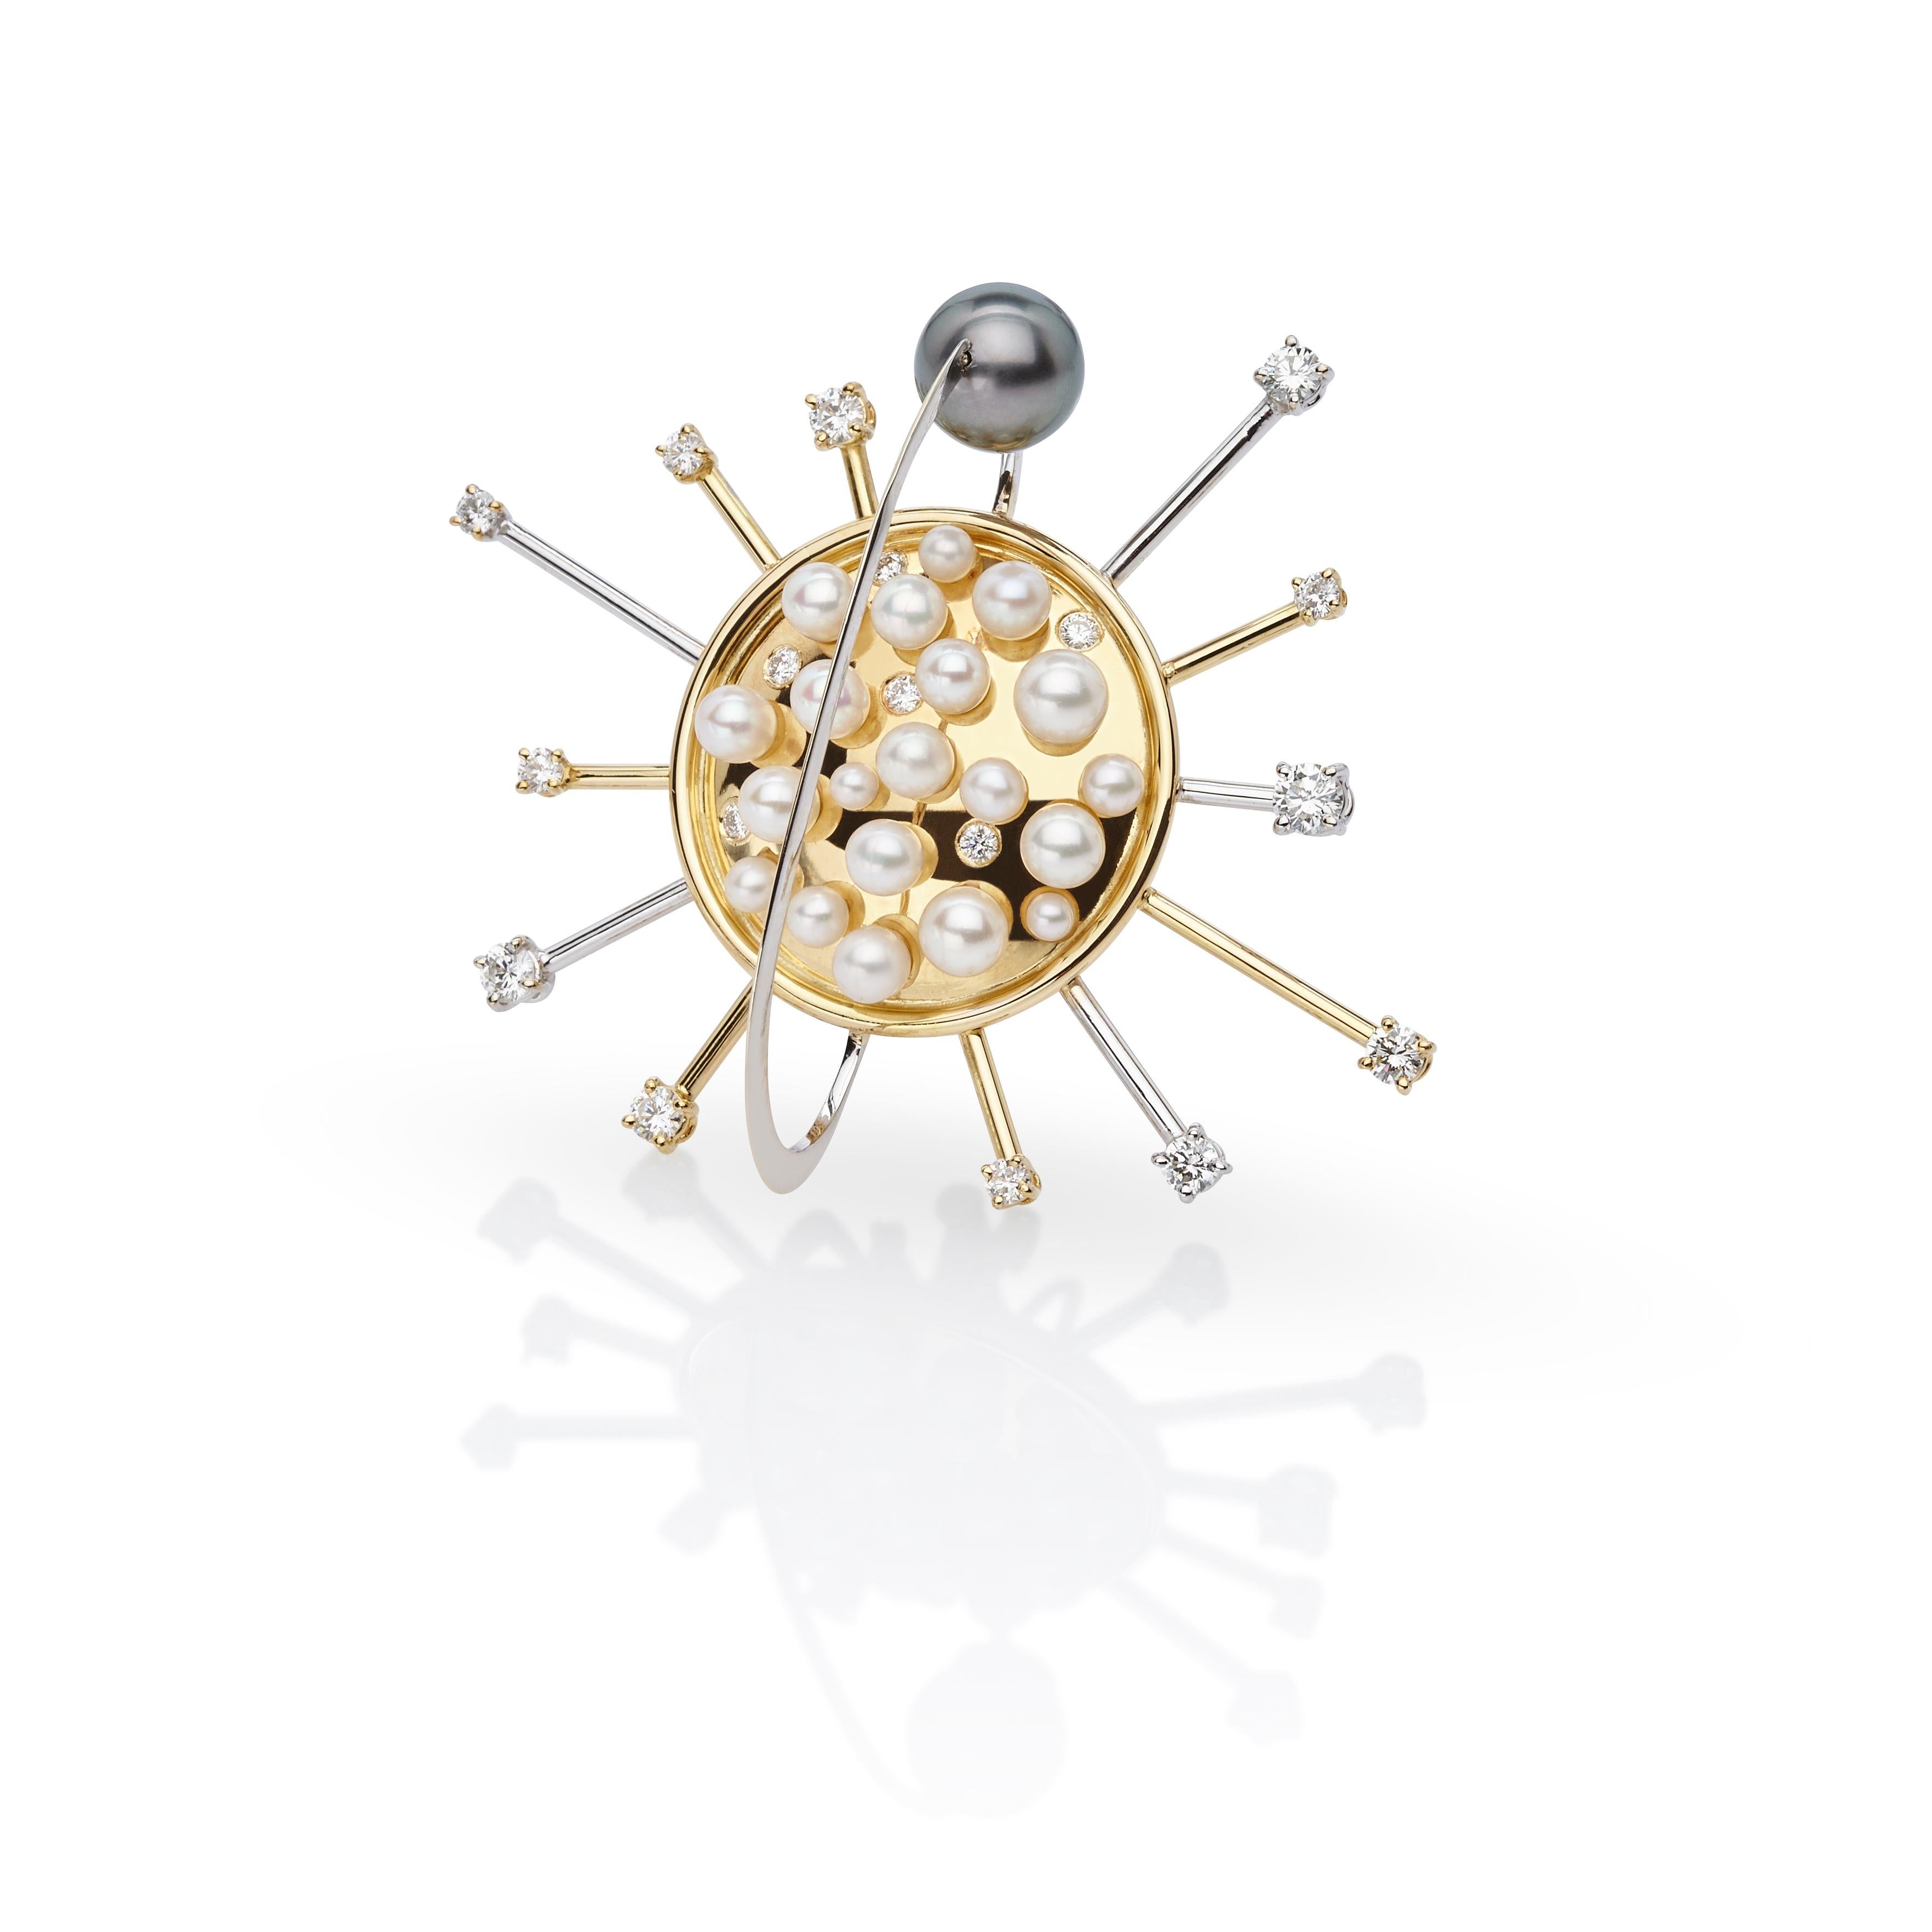 Contemporain Collier brochure rond de forme planétaire rayonnante en or 18 carats avec perles et diamants en vente